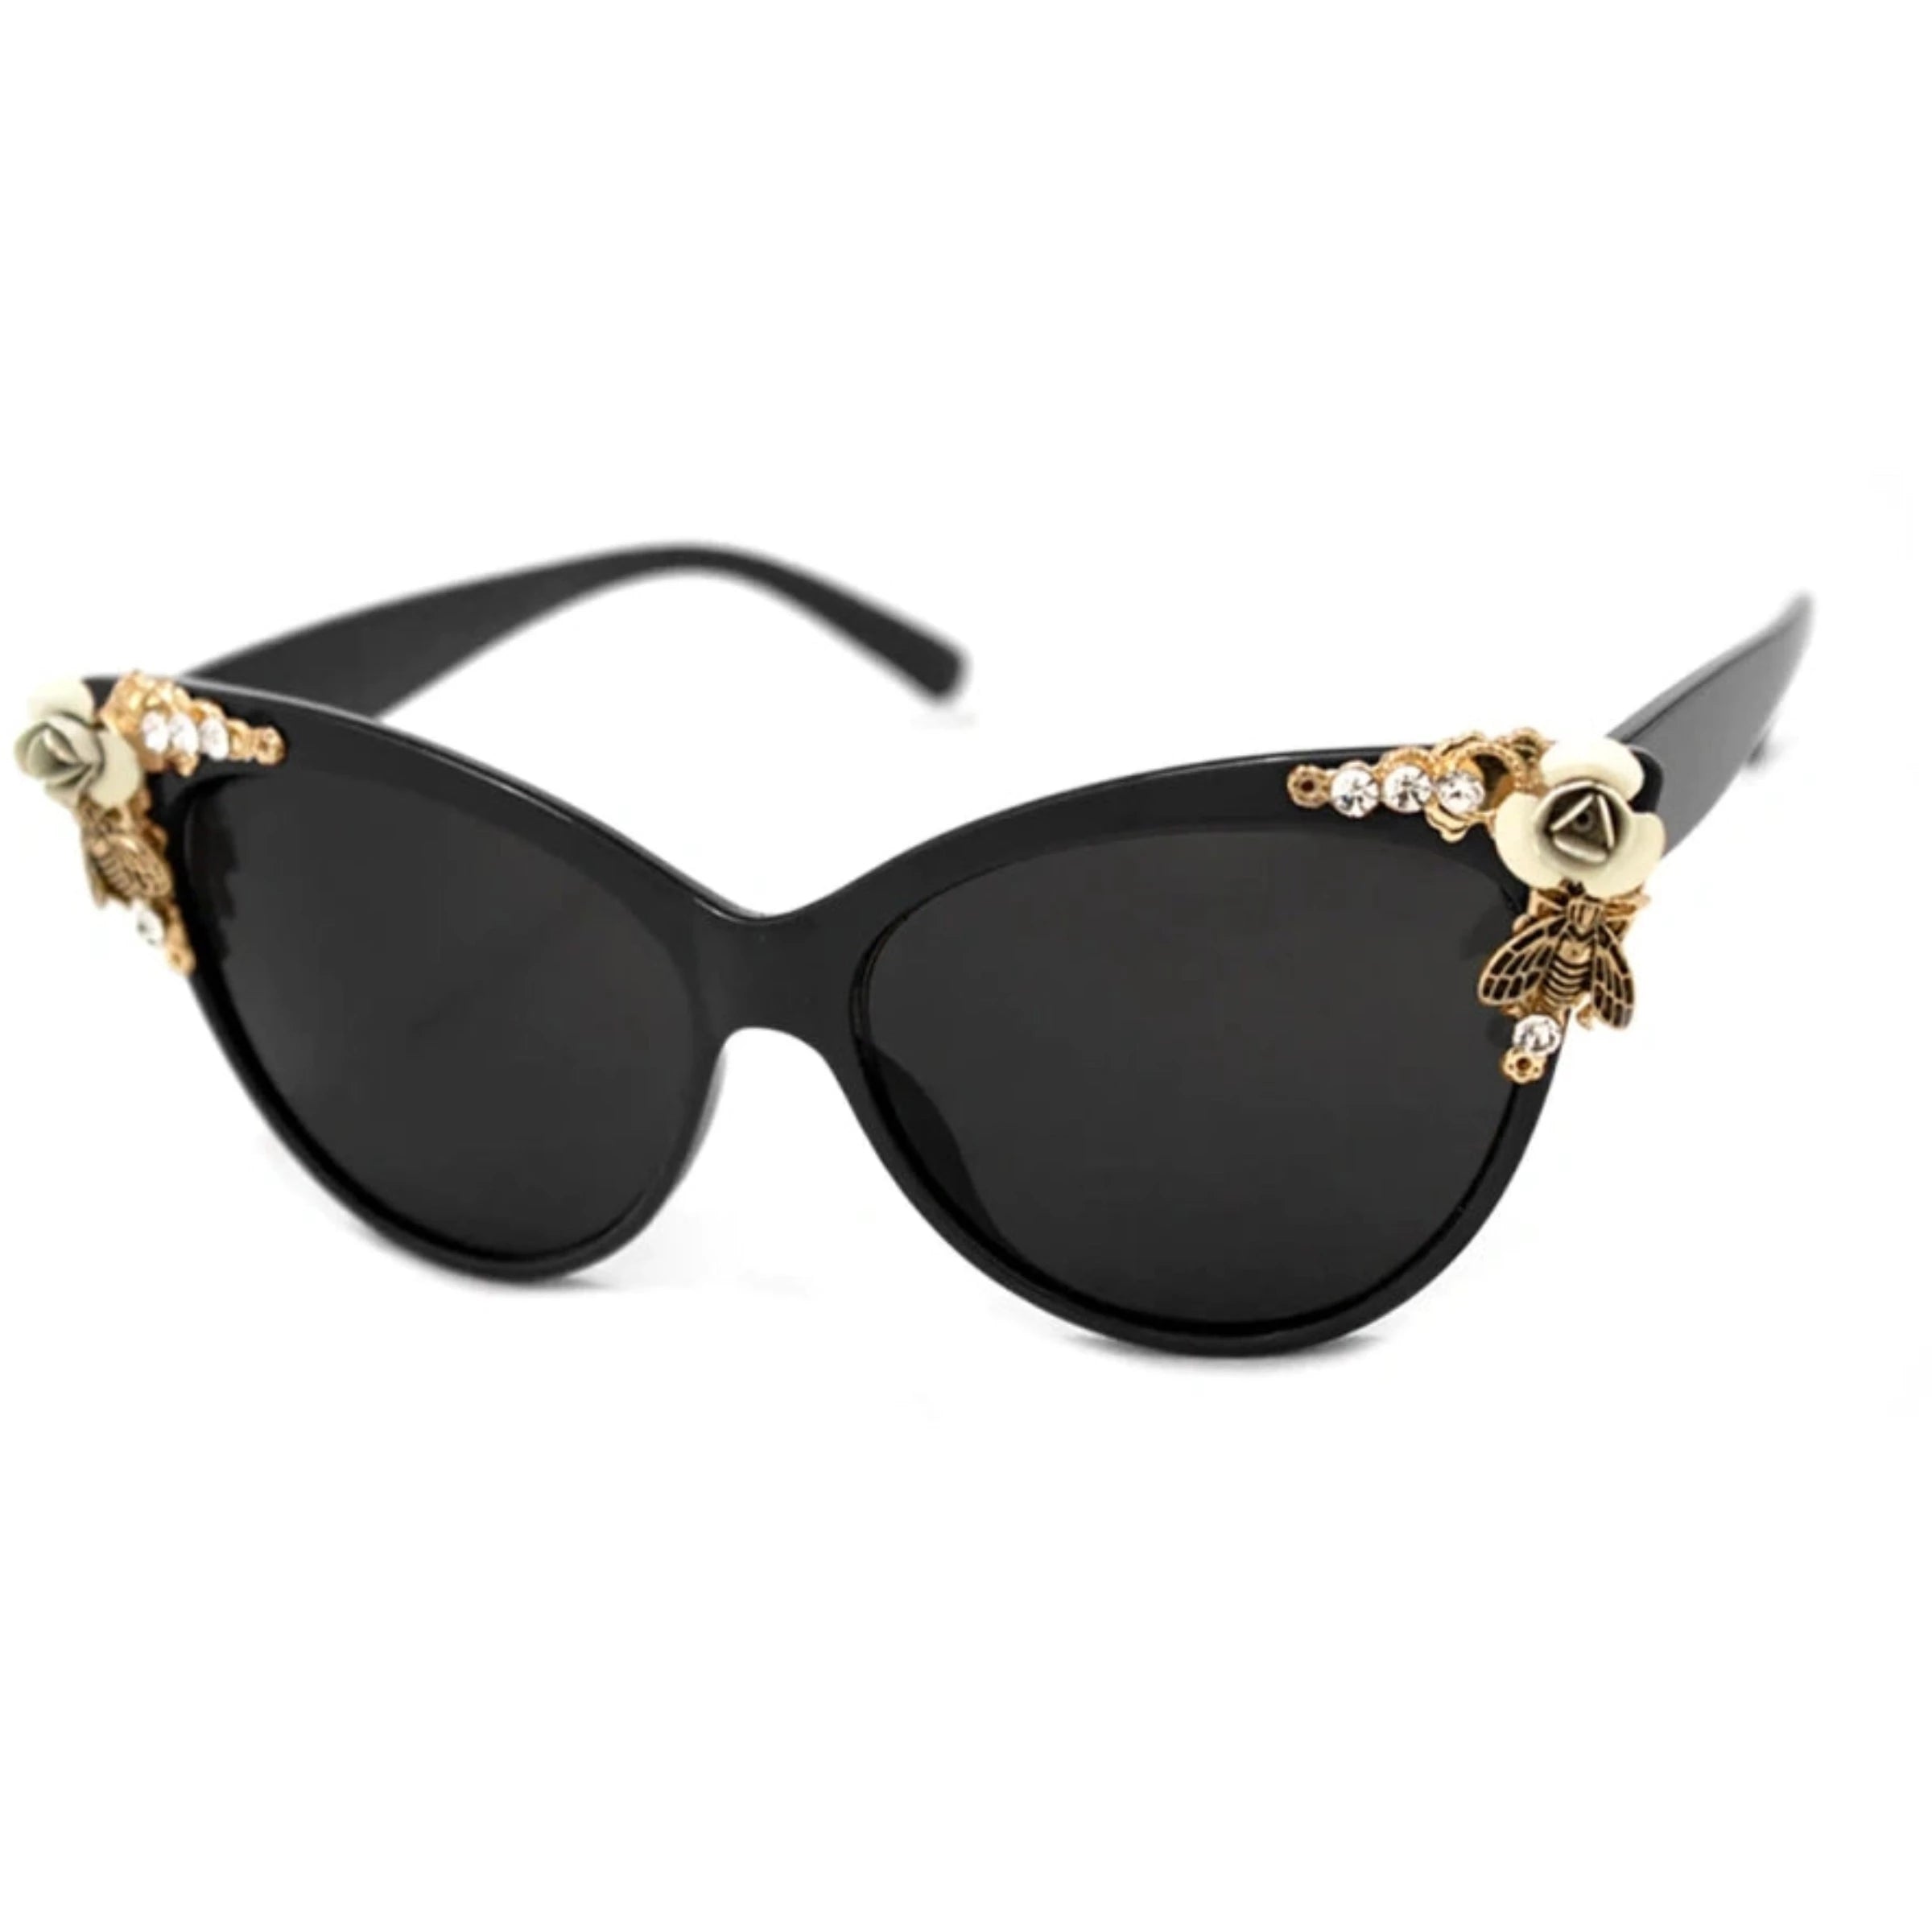 Embellished Bee Sunglasses Besom Boutique